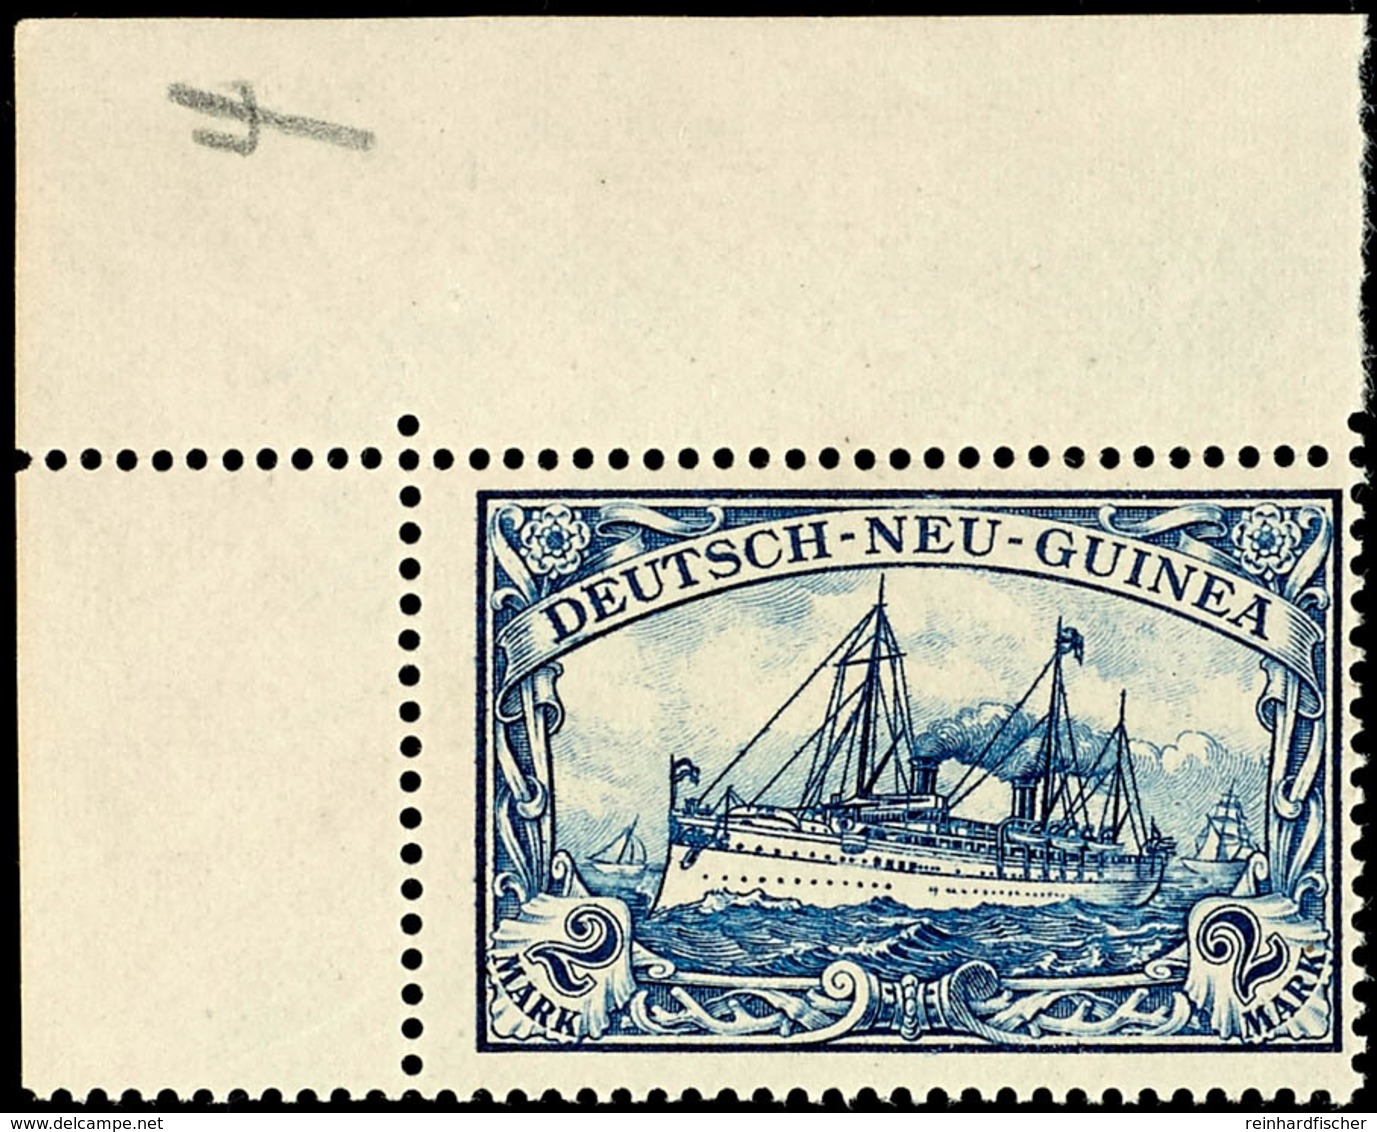 2 M. Kaiseryacht, Postfrisch Aus Der Linken Oberen Bogenecke, Katalog: 17 ** - German New Guinea